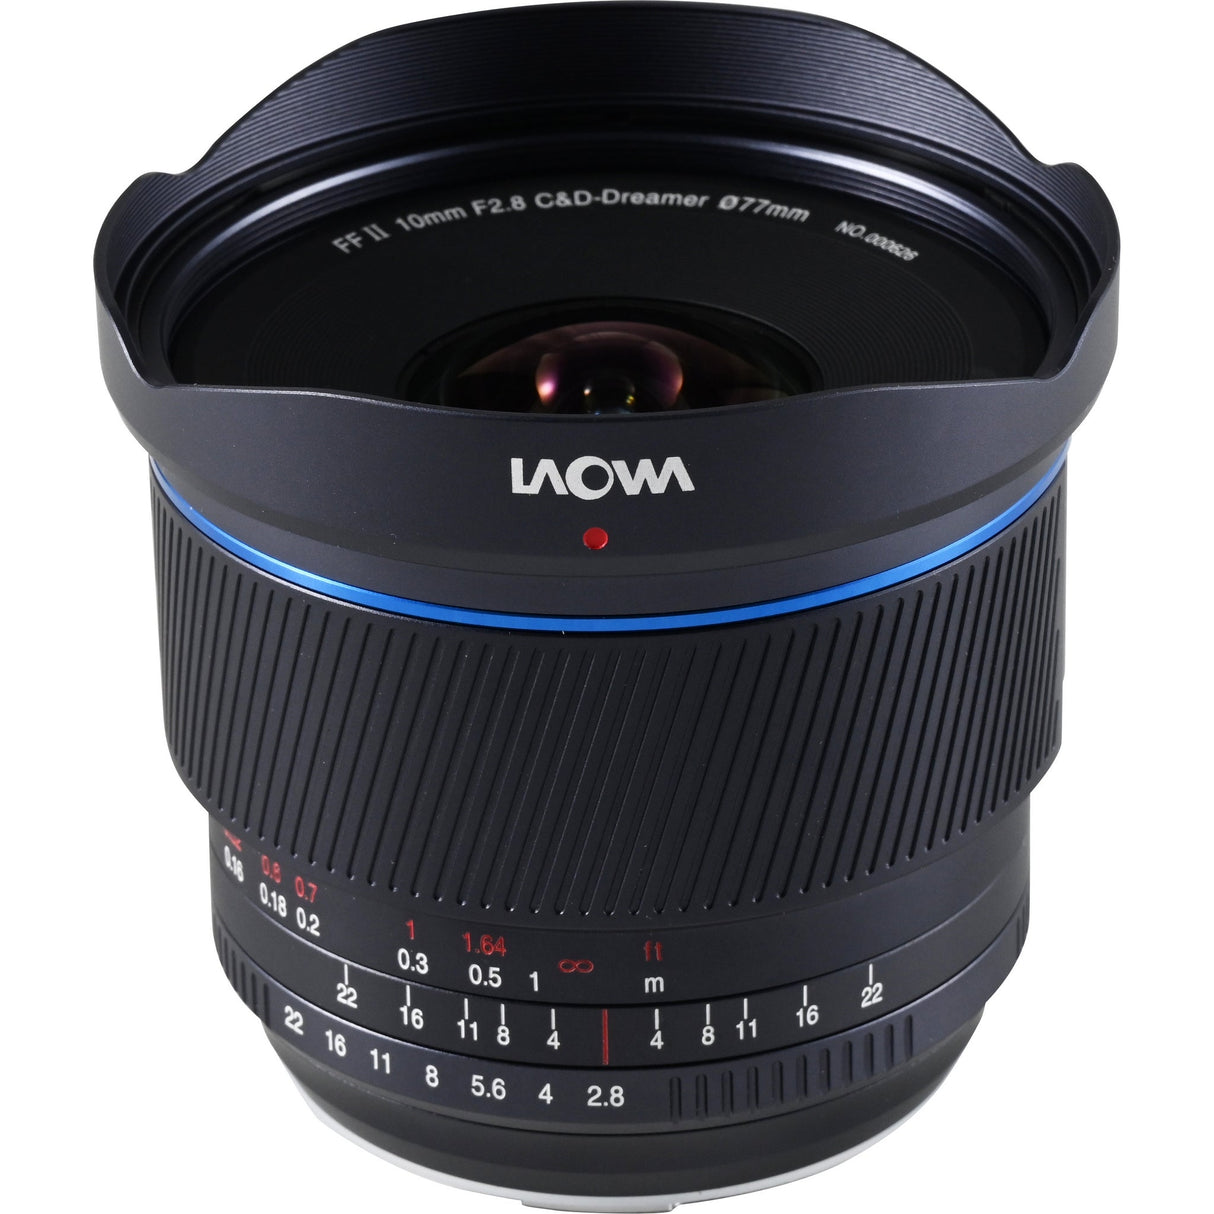 Laowa 10mm f/2.8 Zero-D FF Ultra Wide Angle Lens